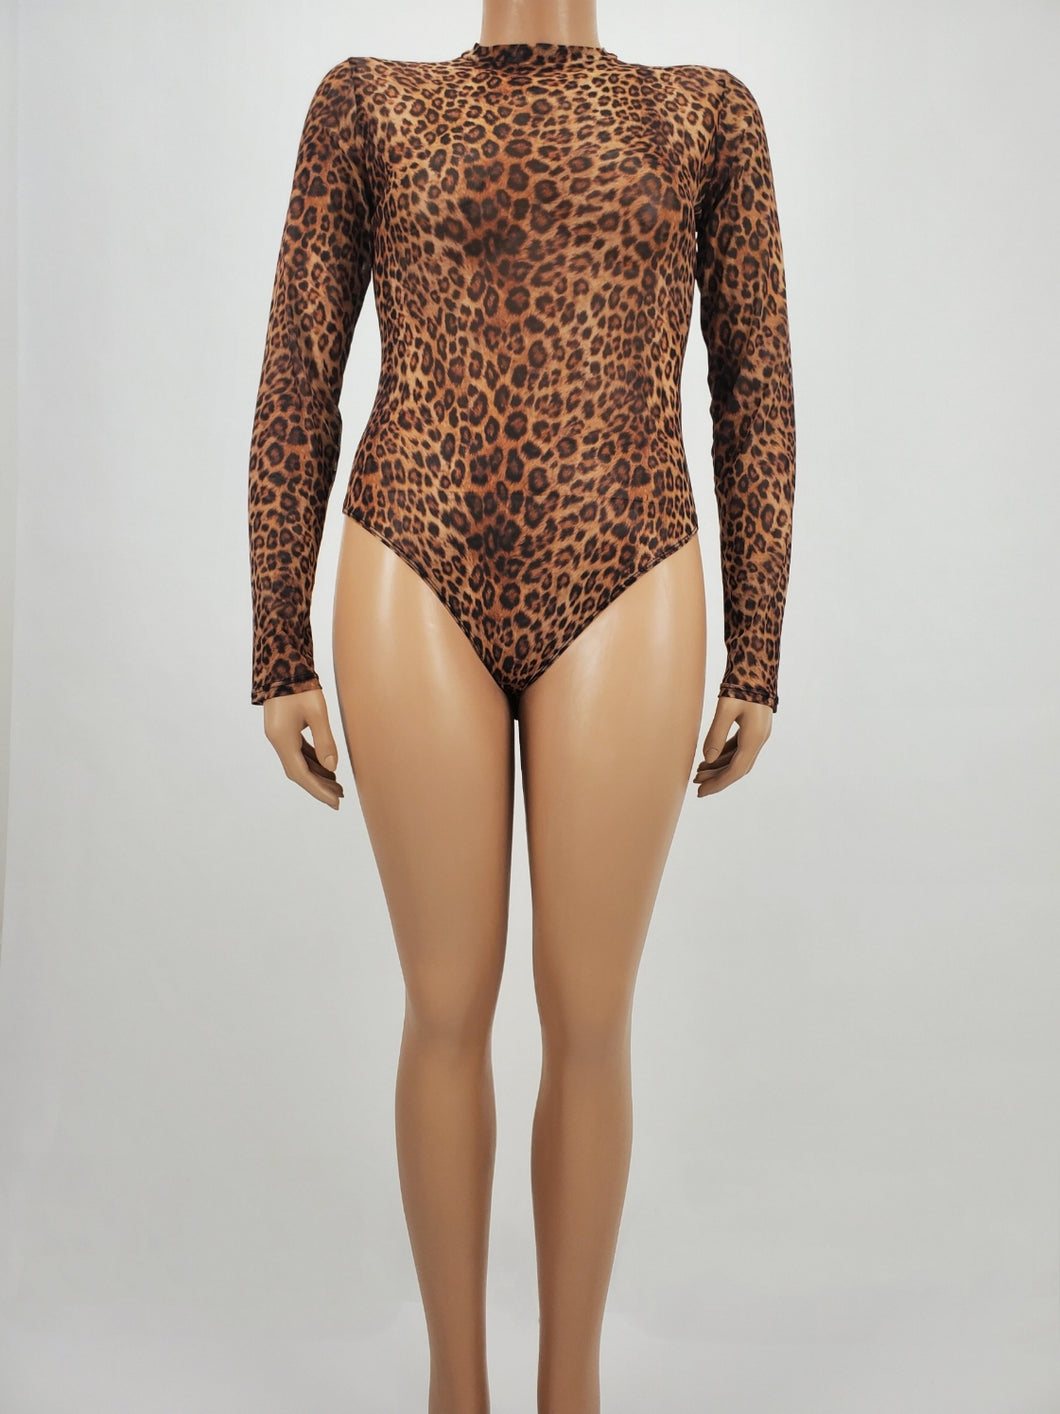 Cheetah Print Mesh Long Sleeve Bodysuit Plus Size (Brown)